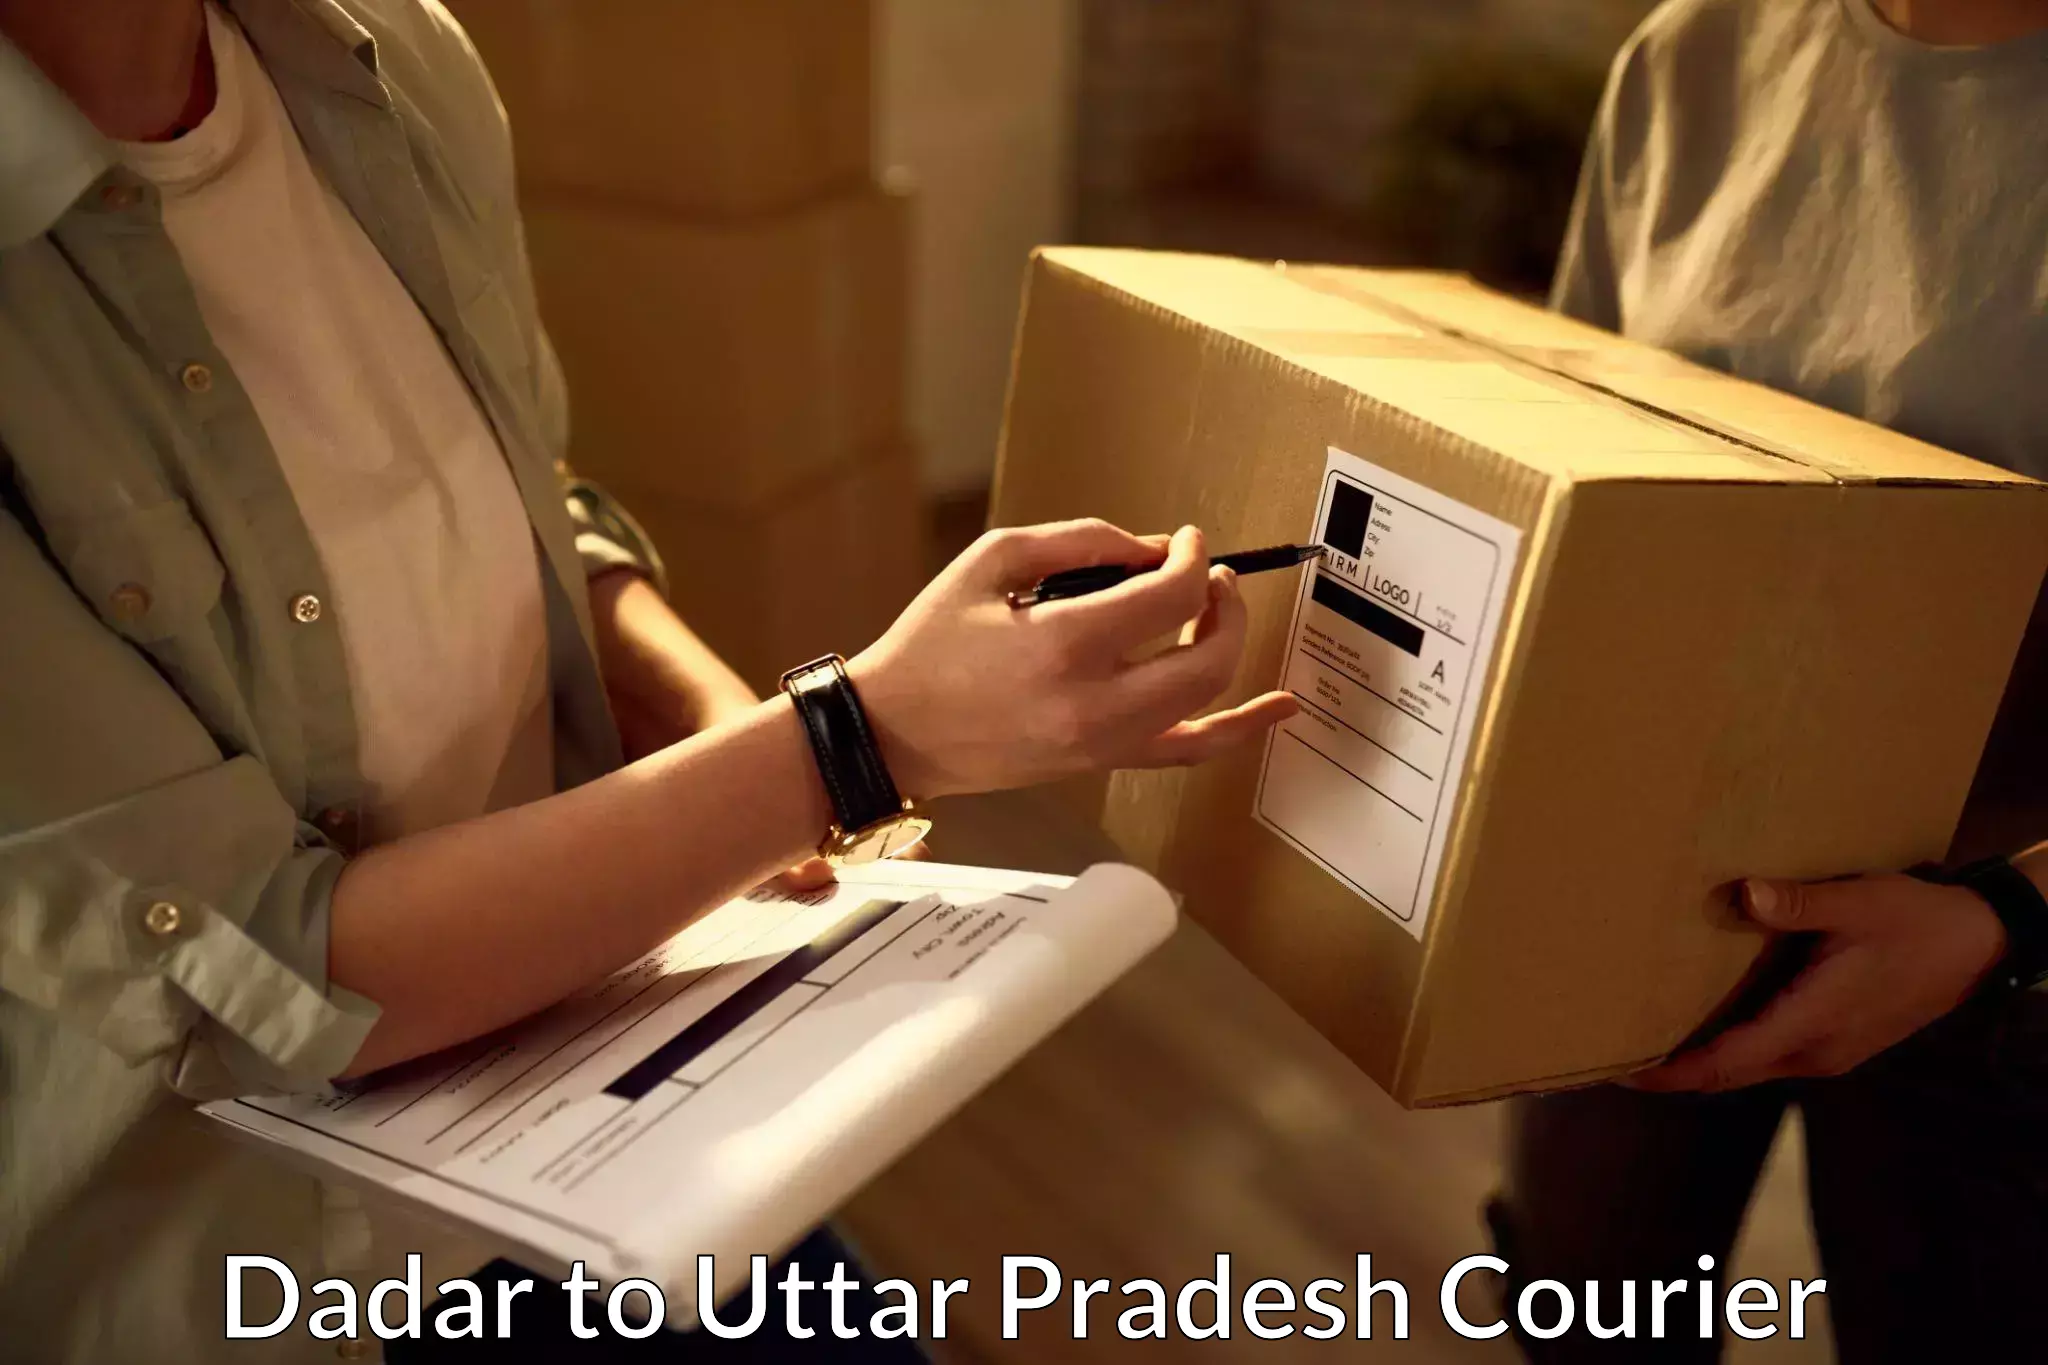 Digital courier platforms Dadar to Agra